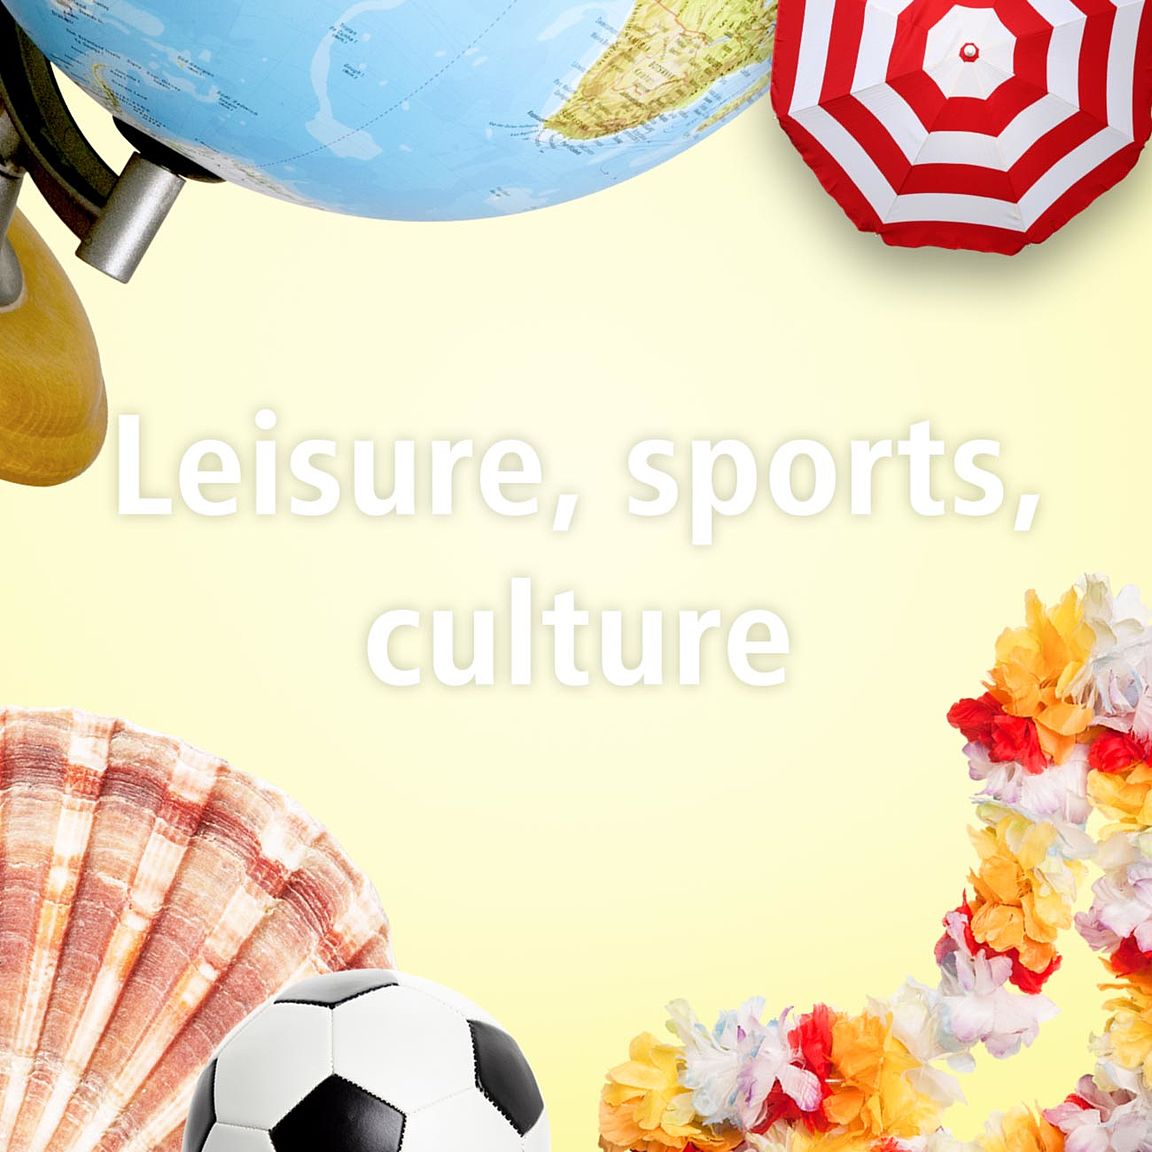 Leisure, sports, culture